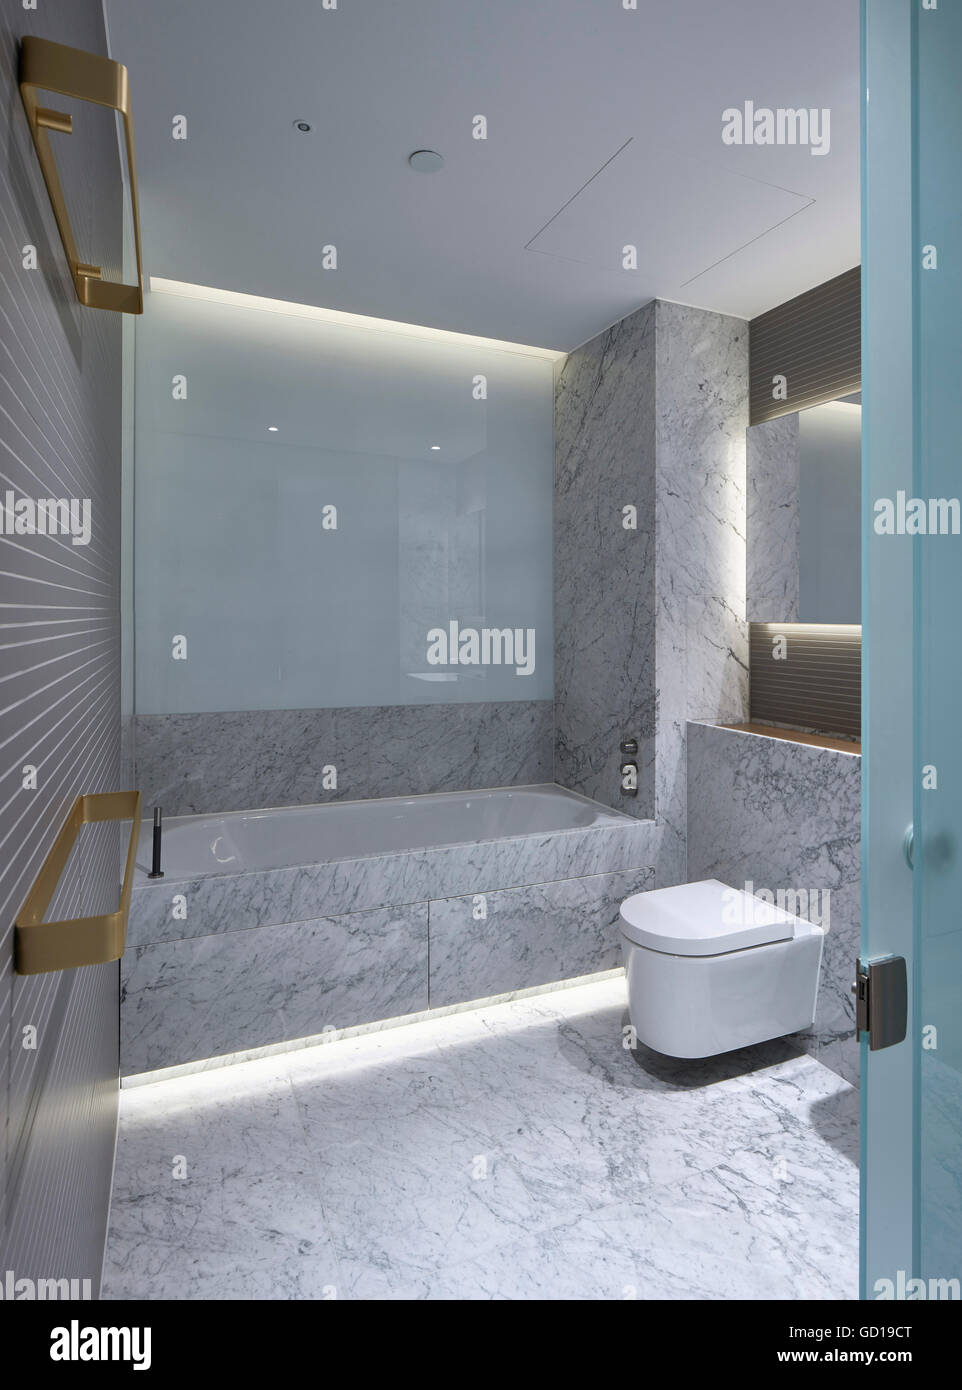 Bathroom interior. Fitzroy Place, London, United Kingdom. Architect: Johnson Naylor , 2016. Stock Photo